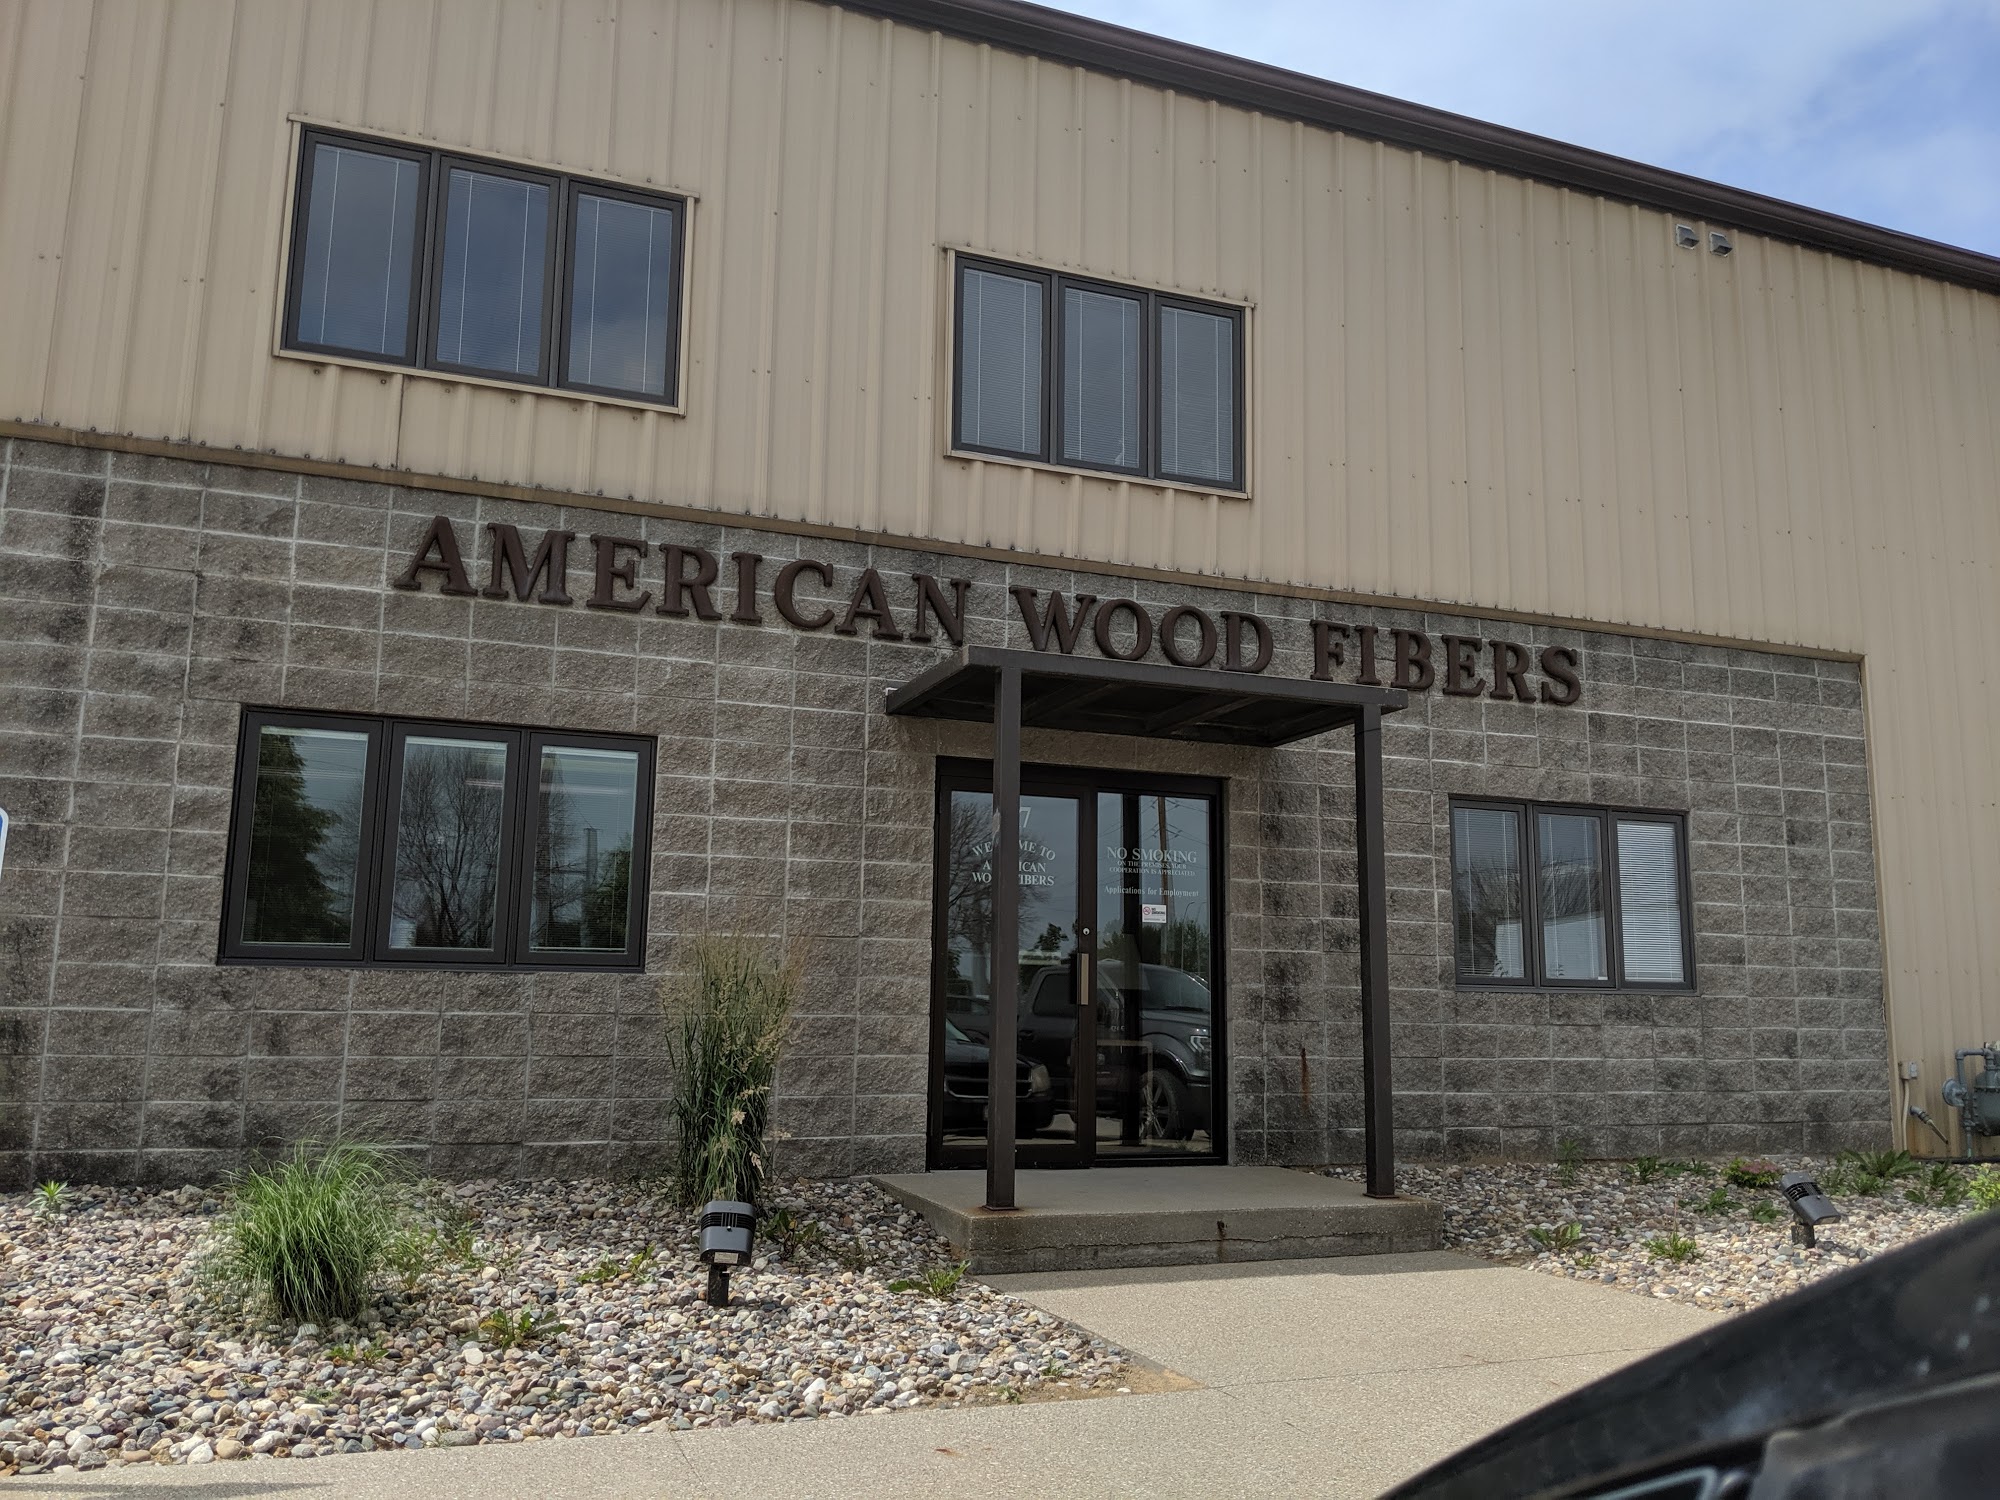 American Wood Fiber